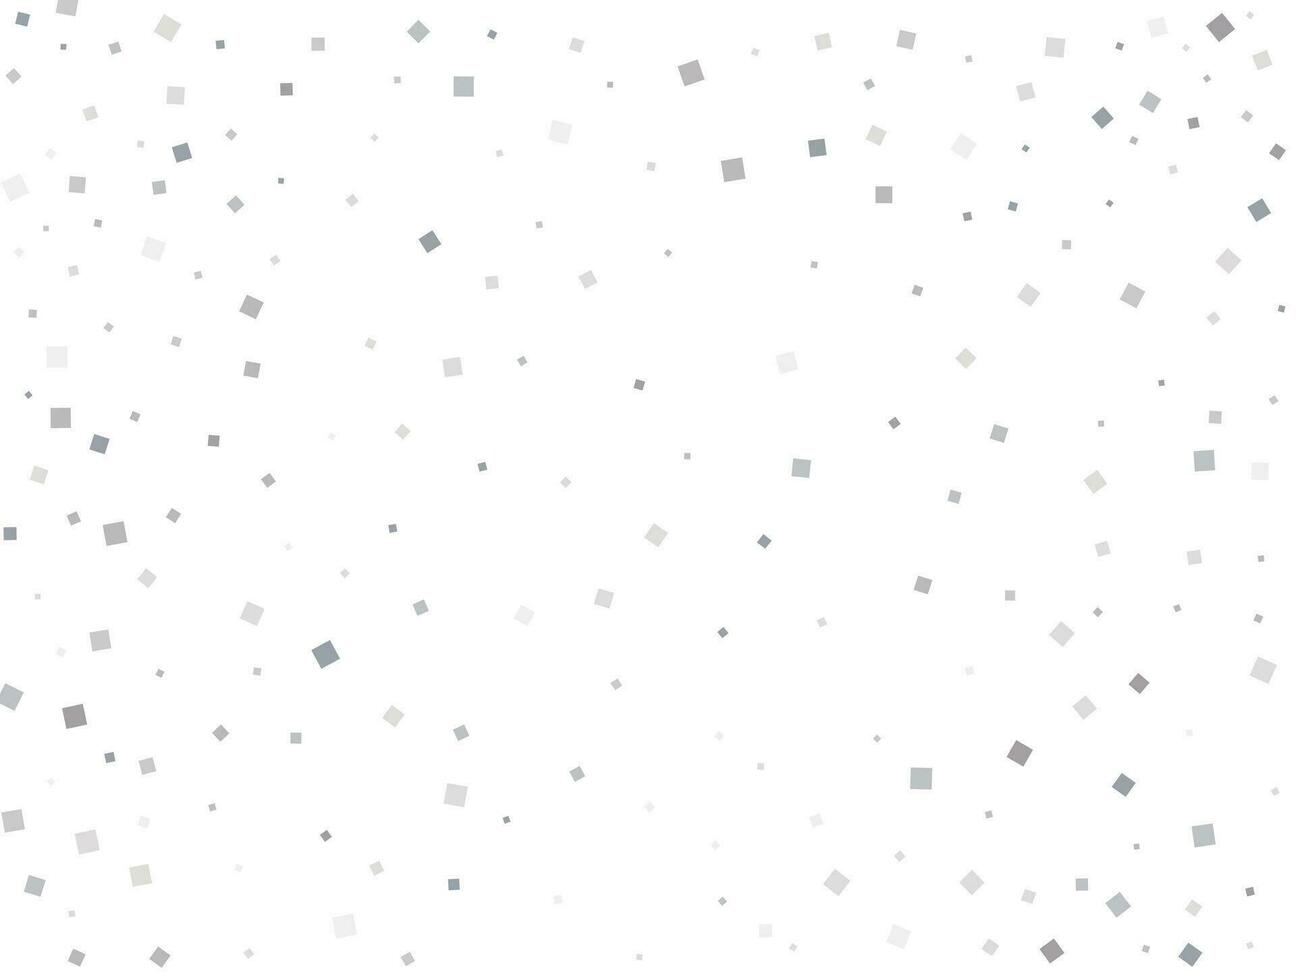 Pattern with silver squares. Christmas silver square confetti. Festive decor. Vector illustration.